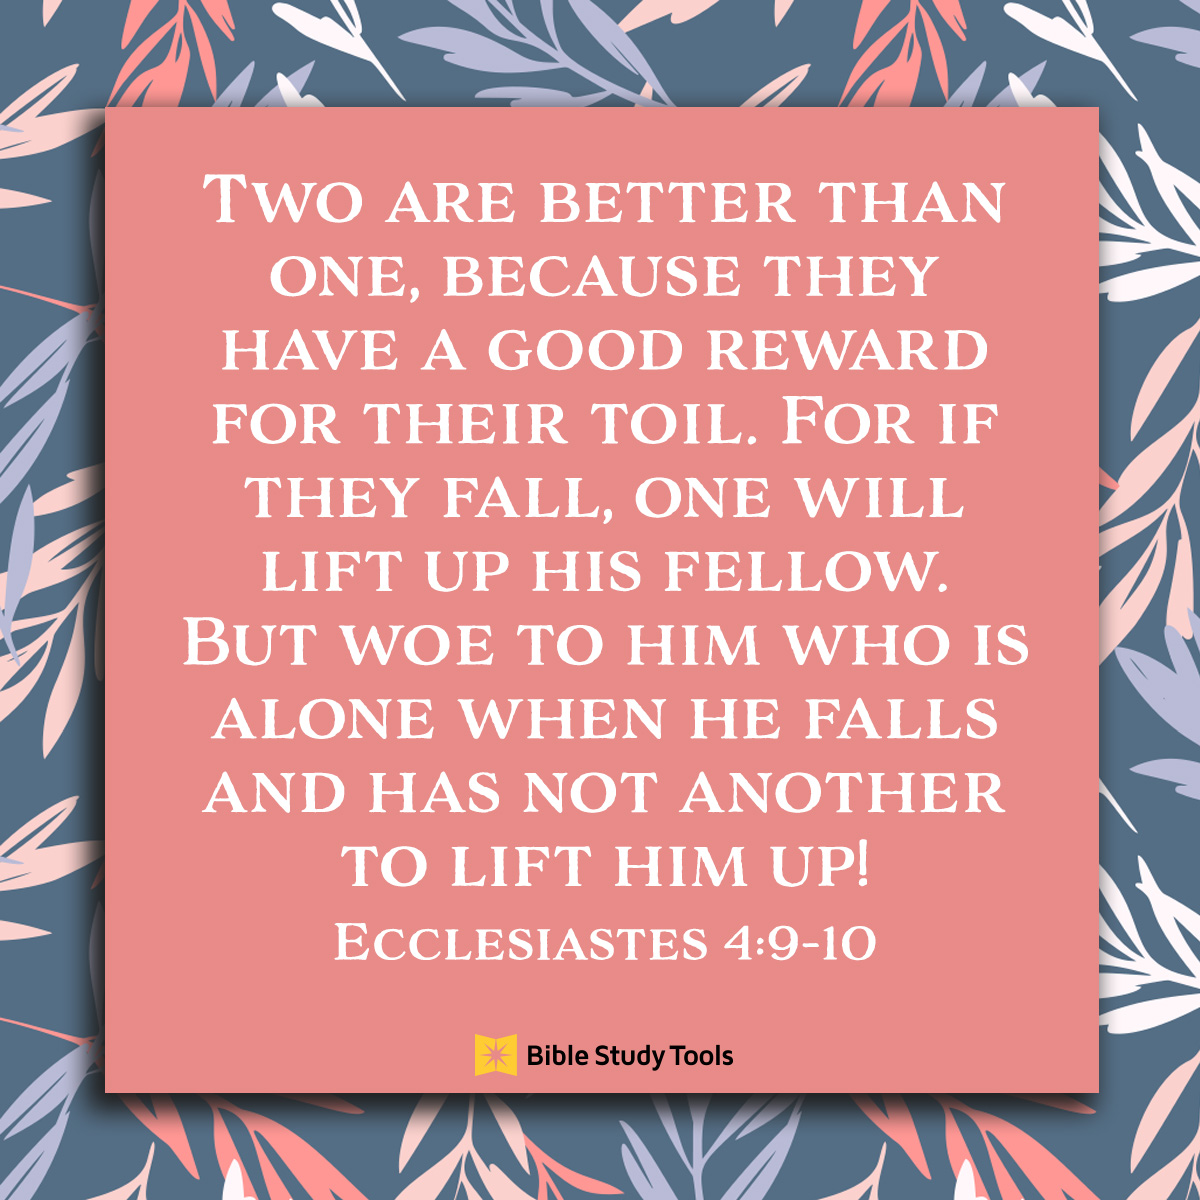 Eccl 4:9-10, inspirational image